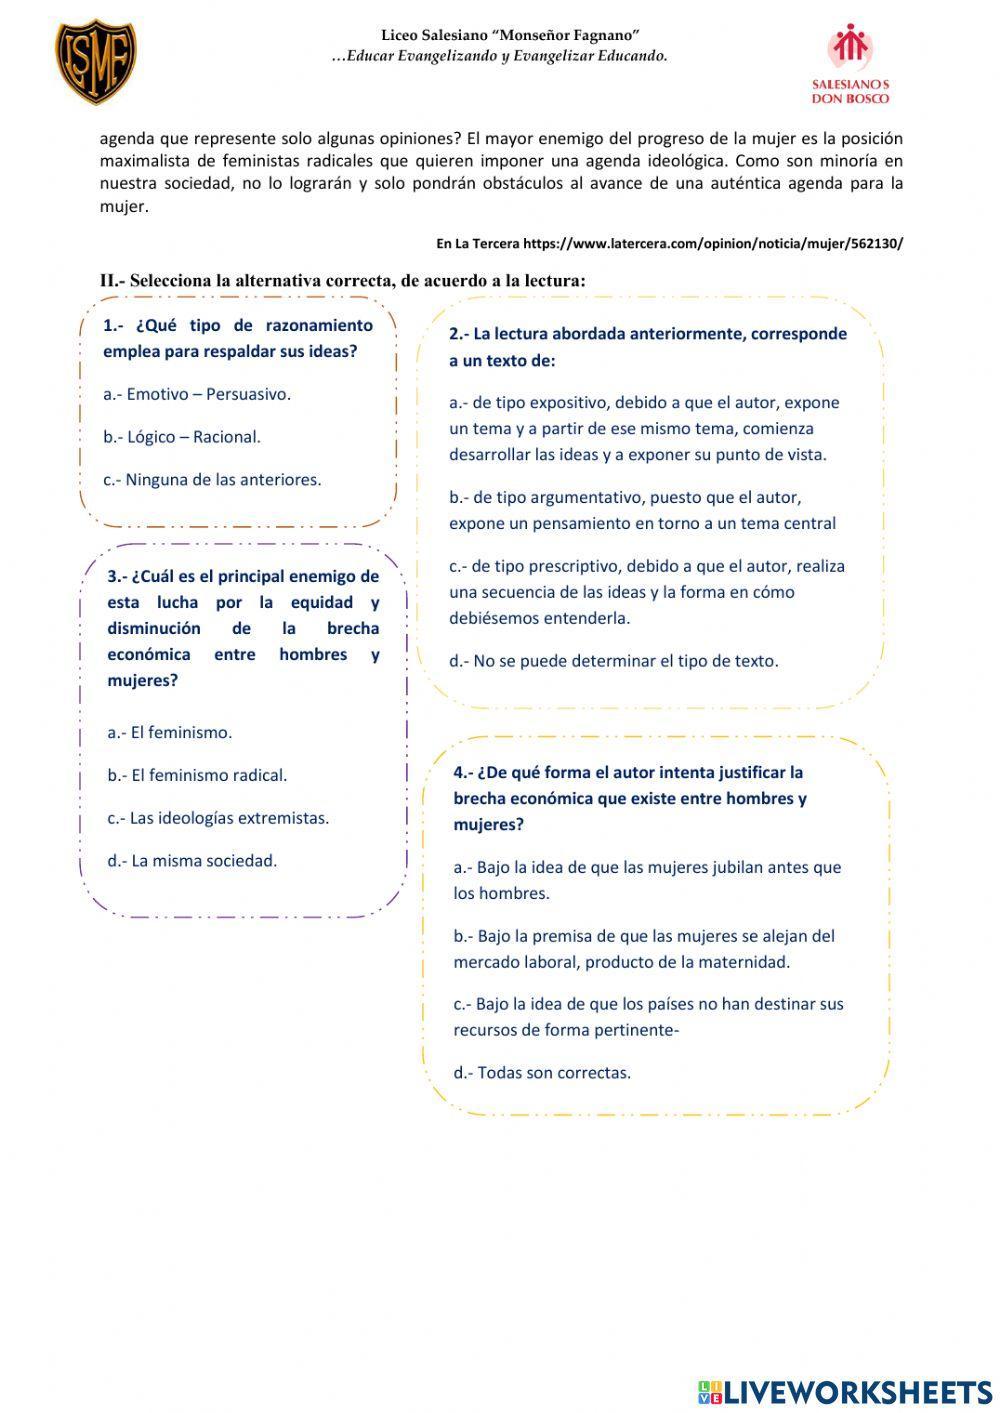 Guía de aprendizaje - Columna de opinión  PD.